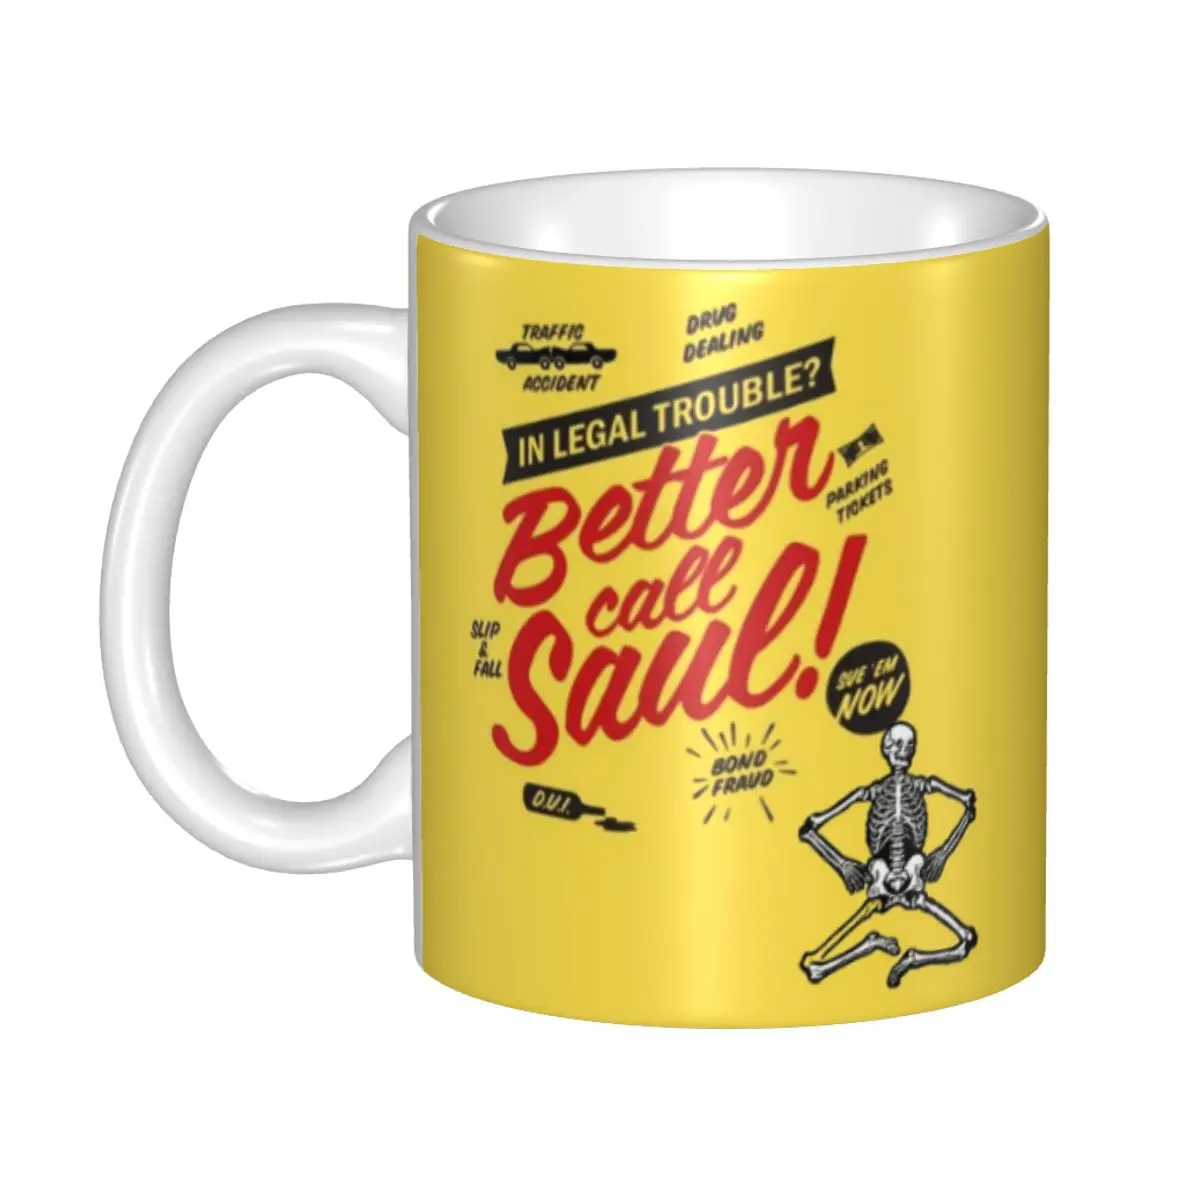 

DIY In Legal Trouble Better Call Saul Ceramic Mug Custom Coffee Cup Creative Present